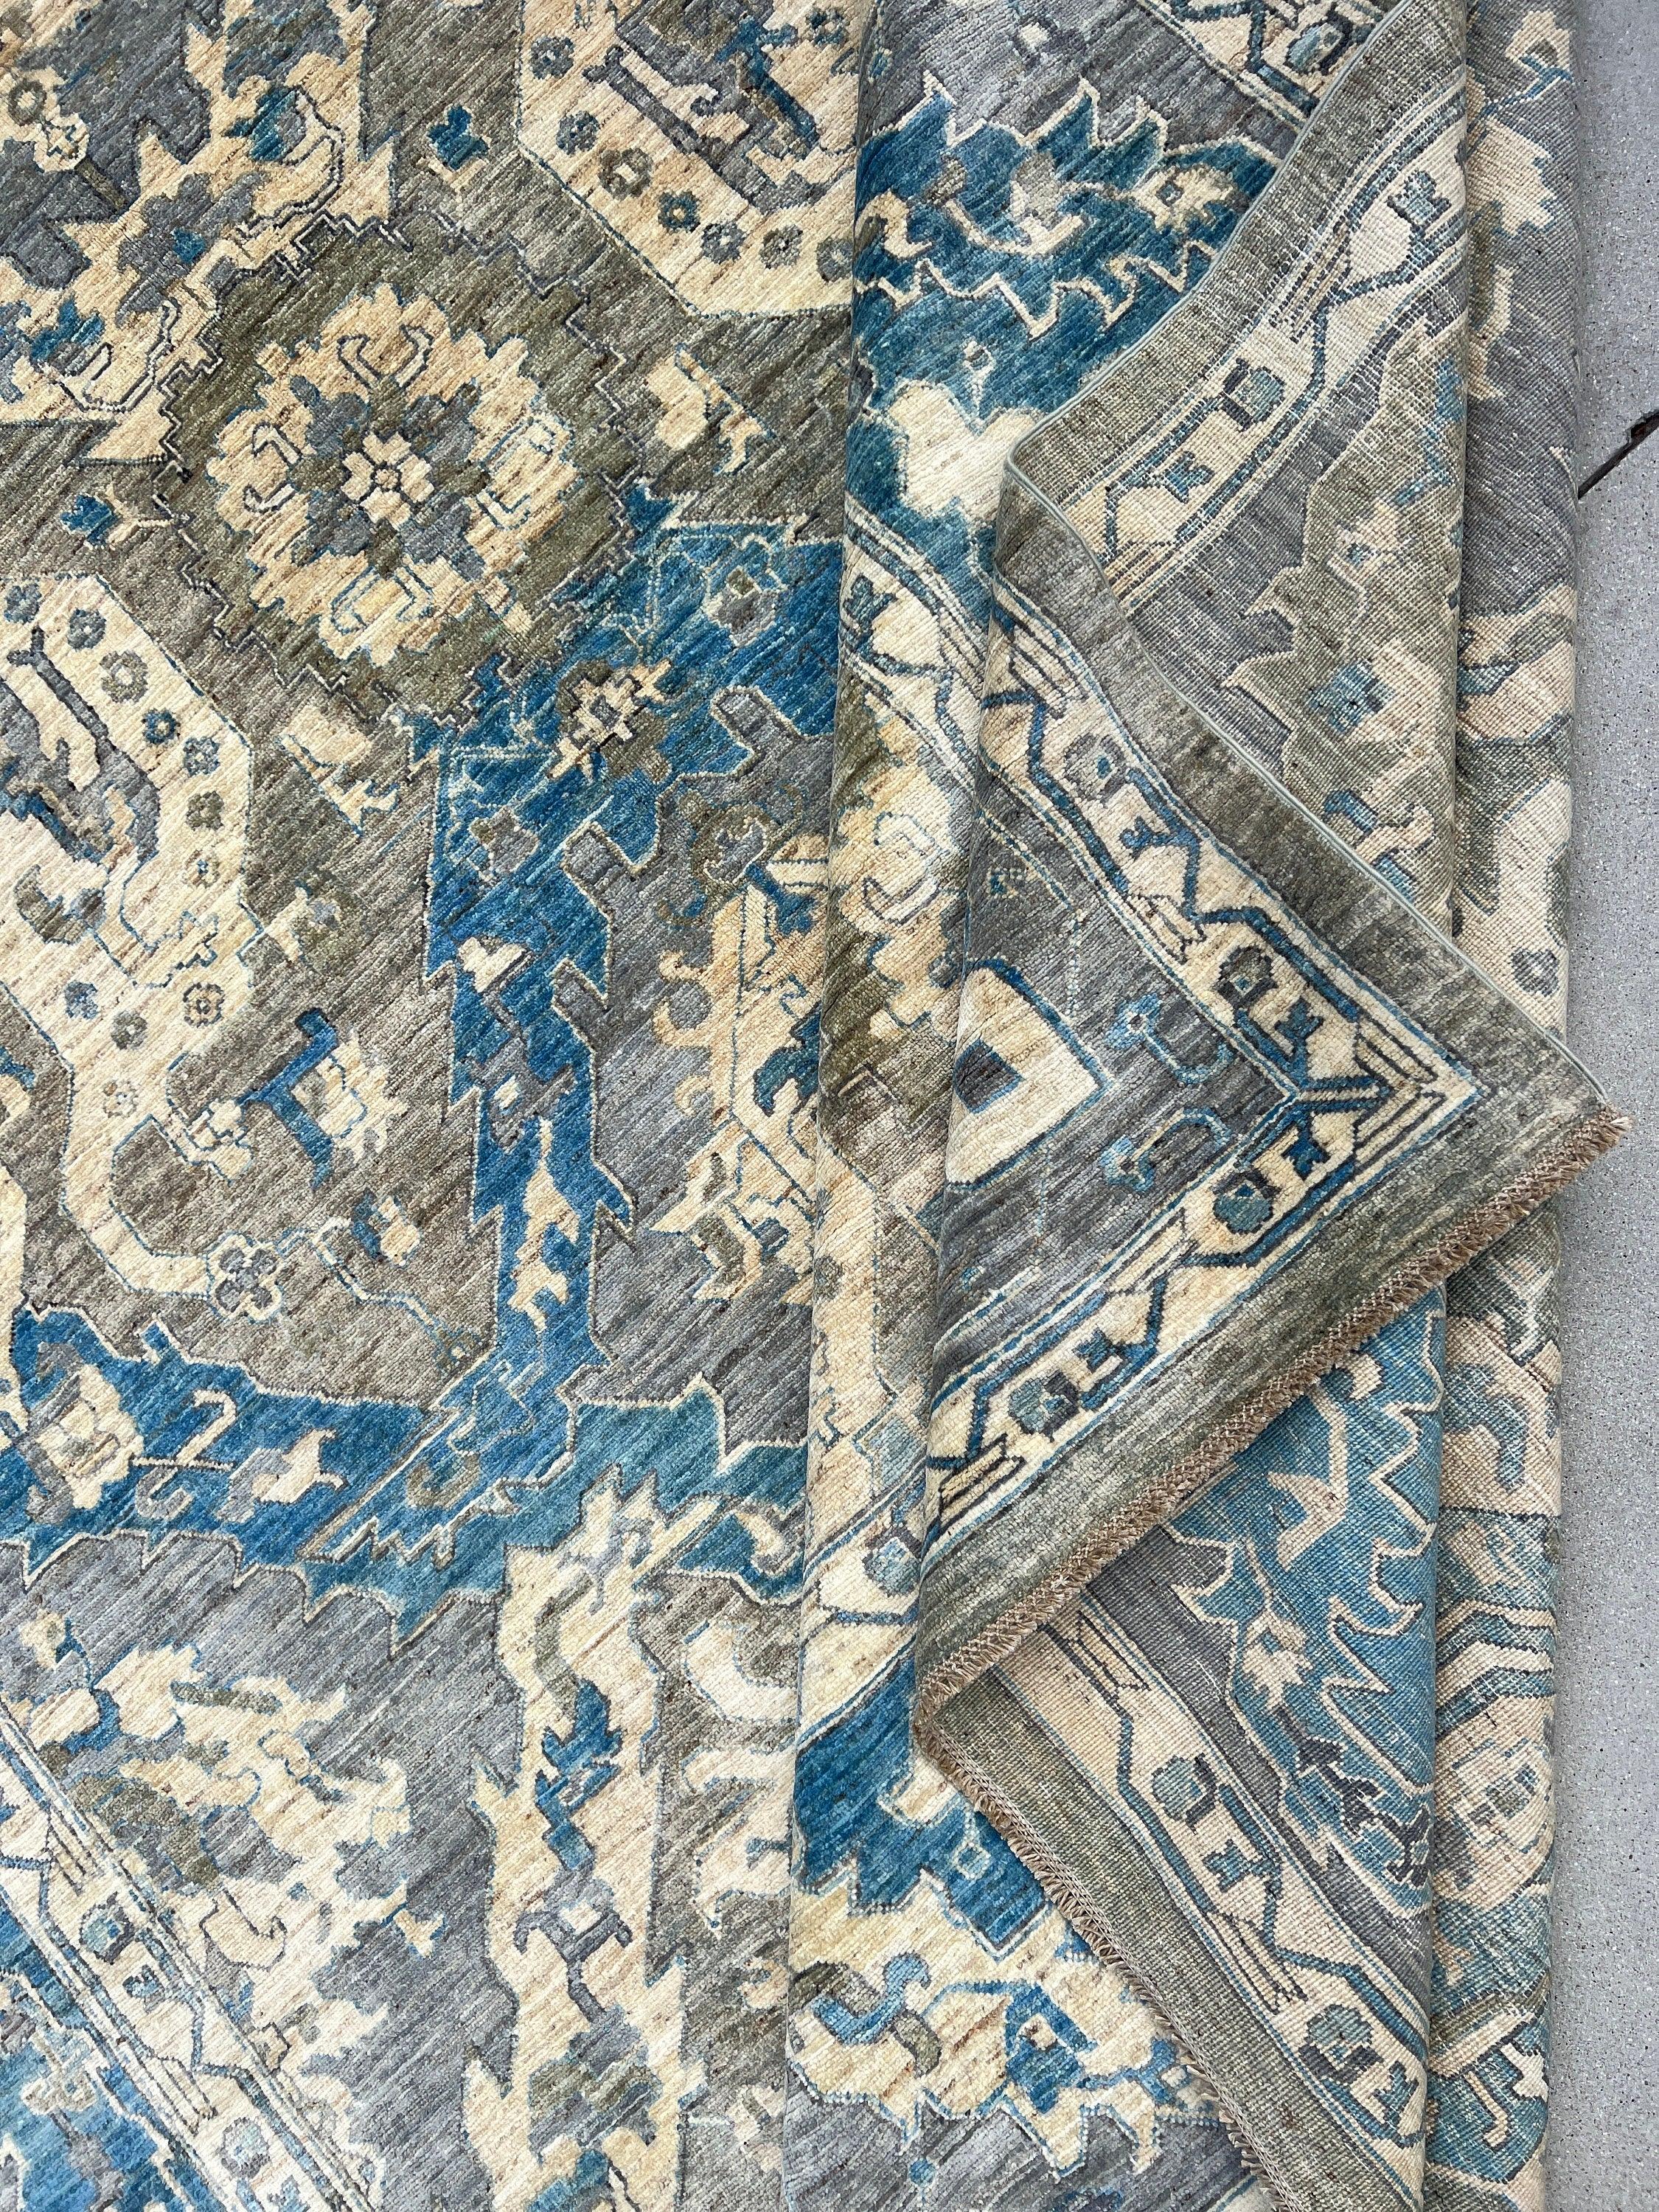 10x14 (305x400) Handmade Afghan Rug | Denim Blue Cream Beige Grey Gray Moss Green | Turkish Oushak Oriental Persian Hand Knotted Wool